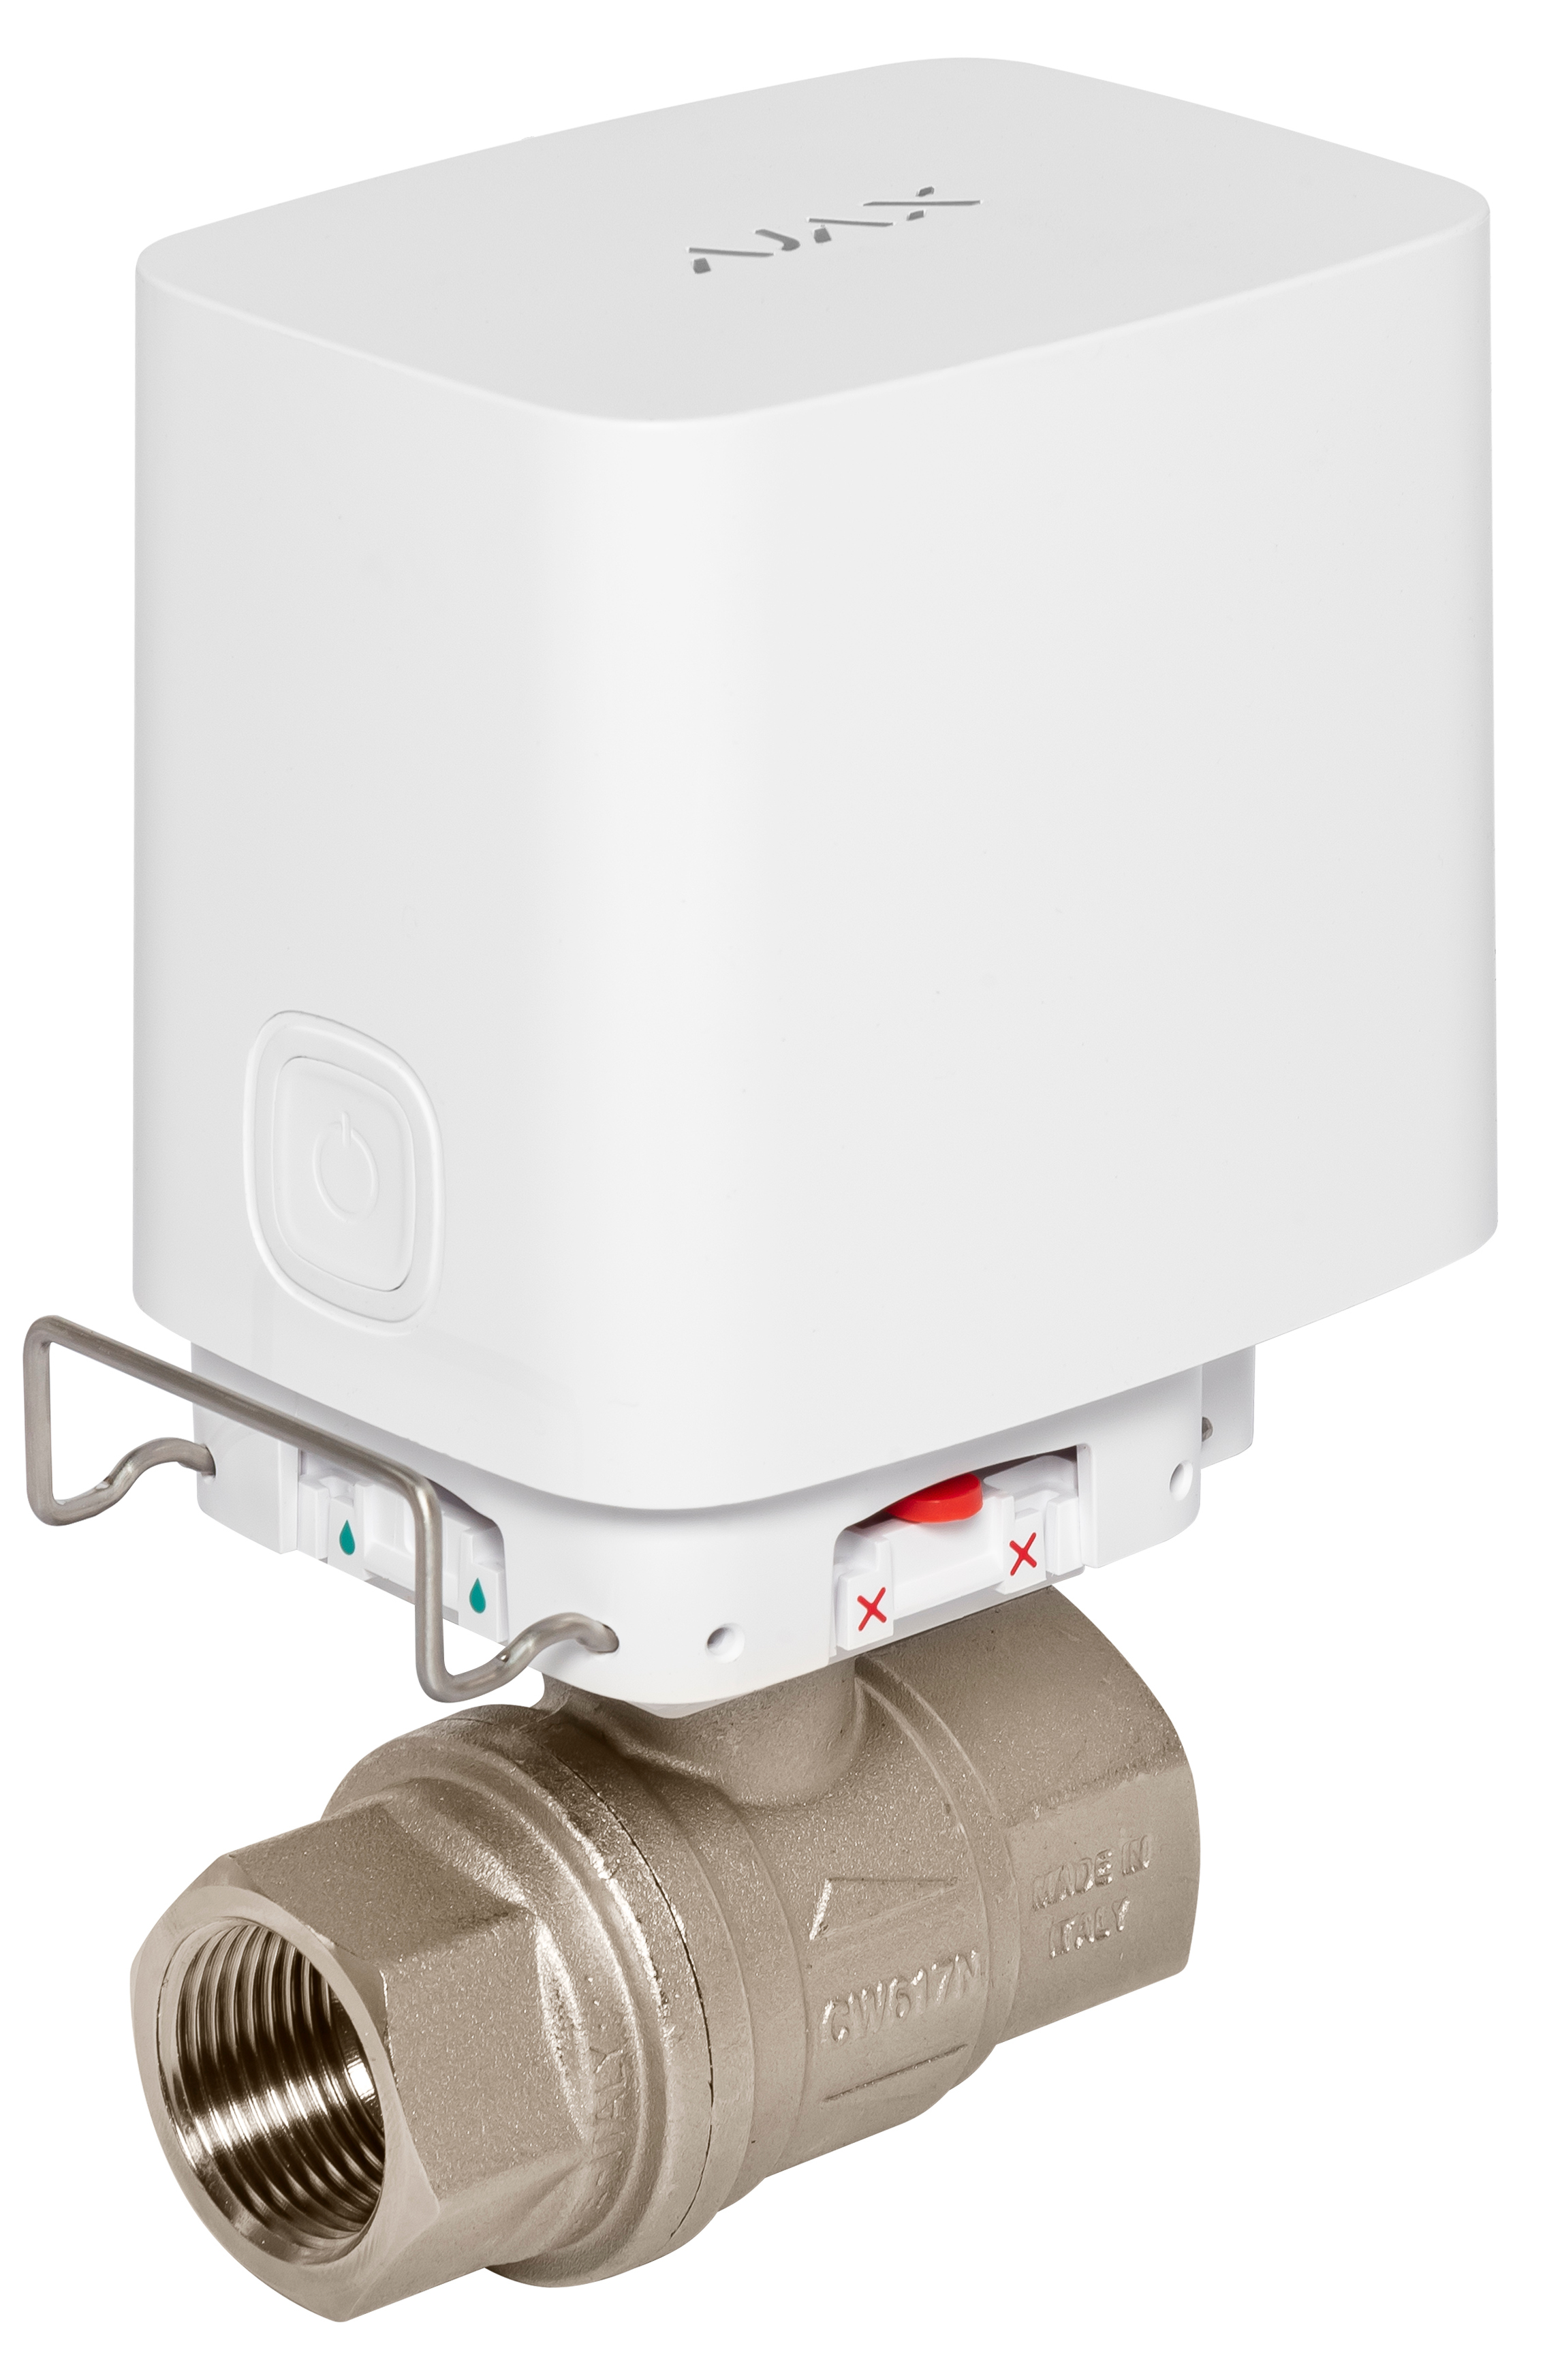 Система защиты от протечки воды Ajax WaterStop 3/4" White + Hub 2 (4G) White инструкция - изображение 6